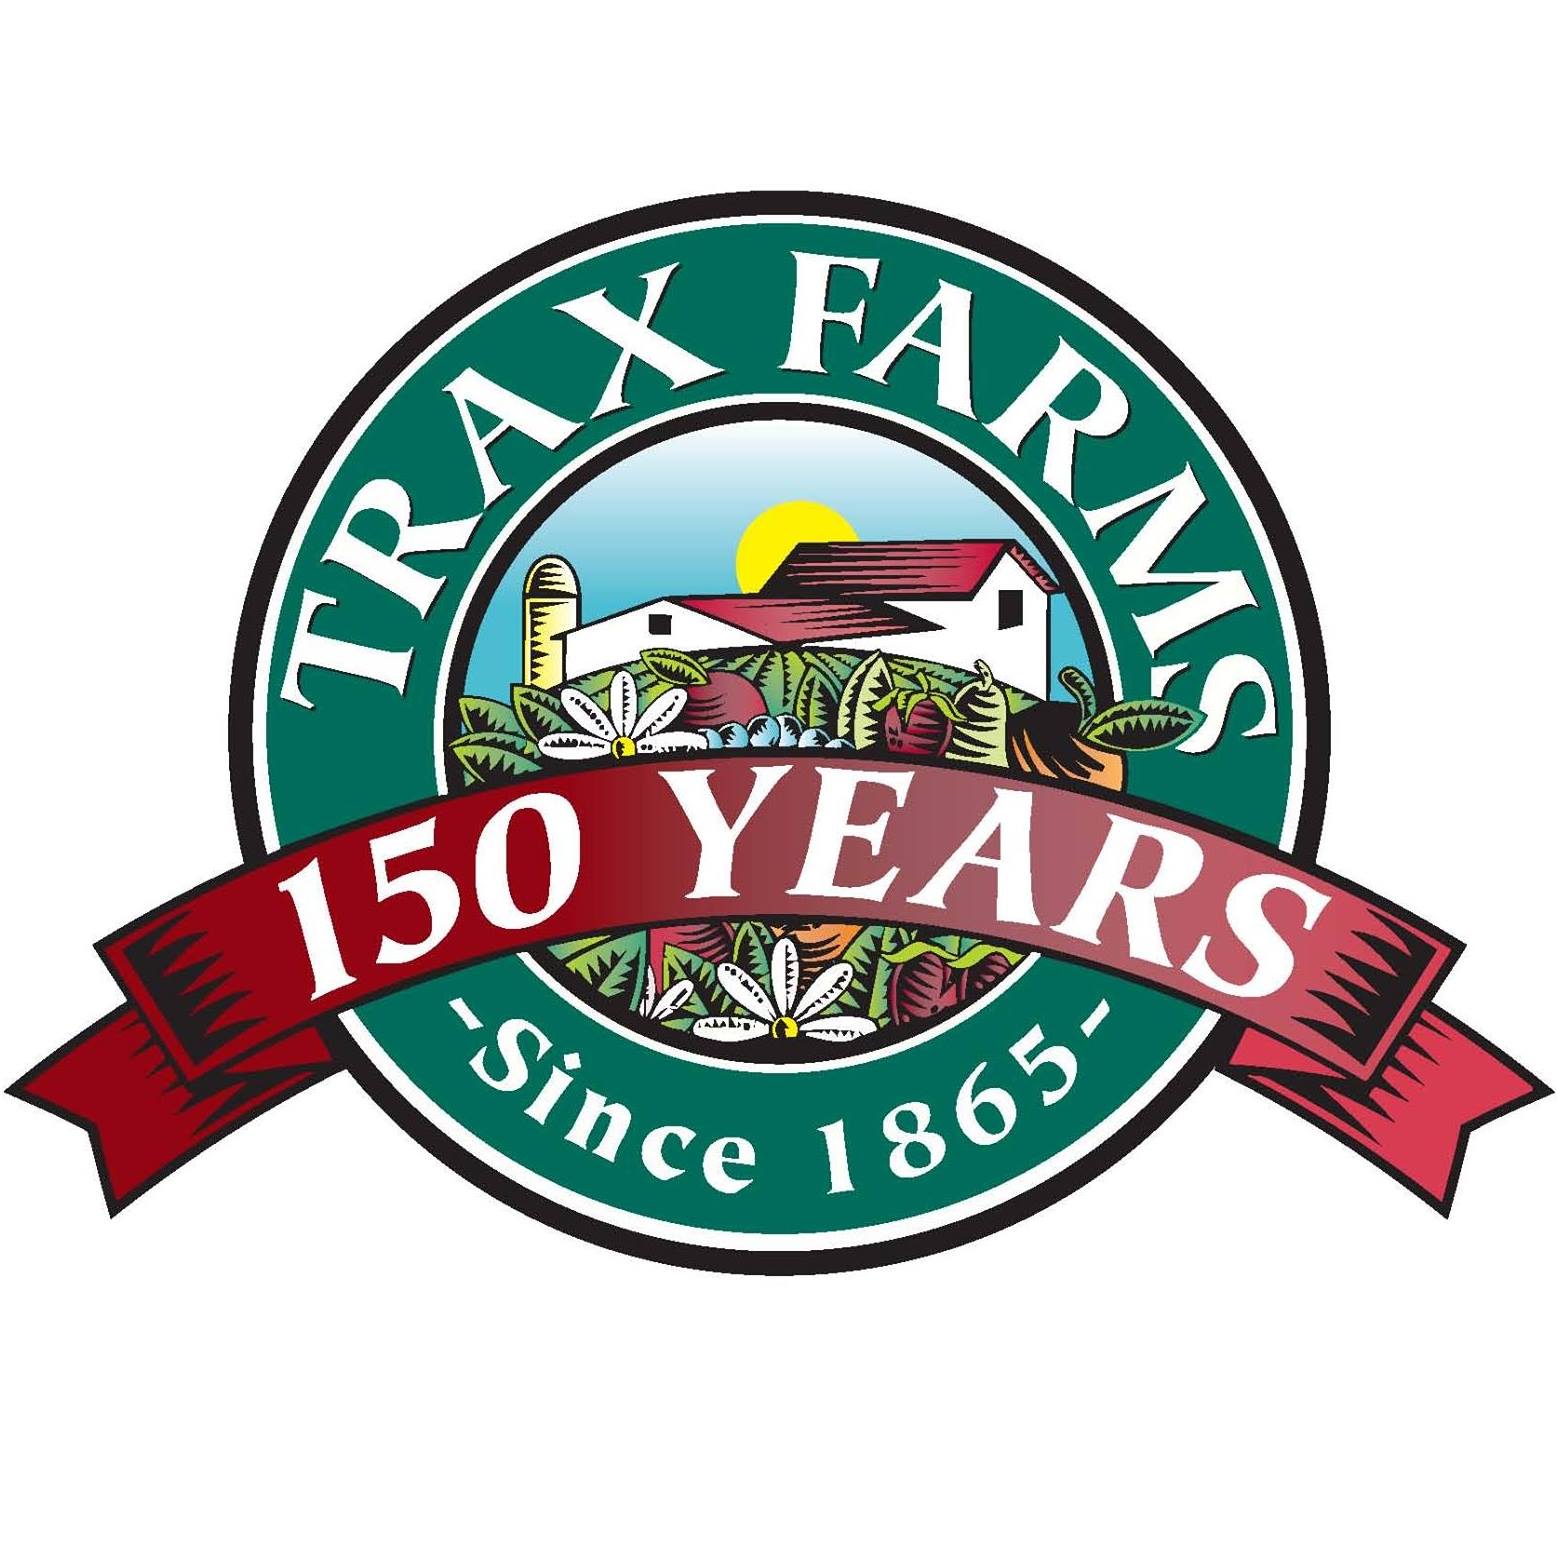 Business logo of Trax Farms Market